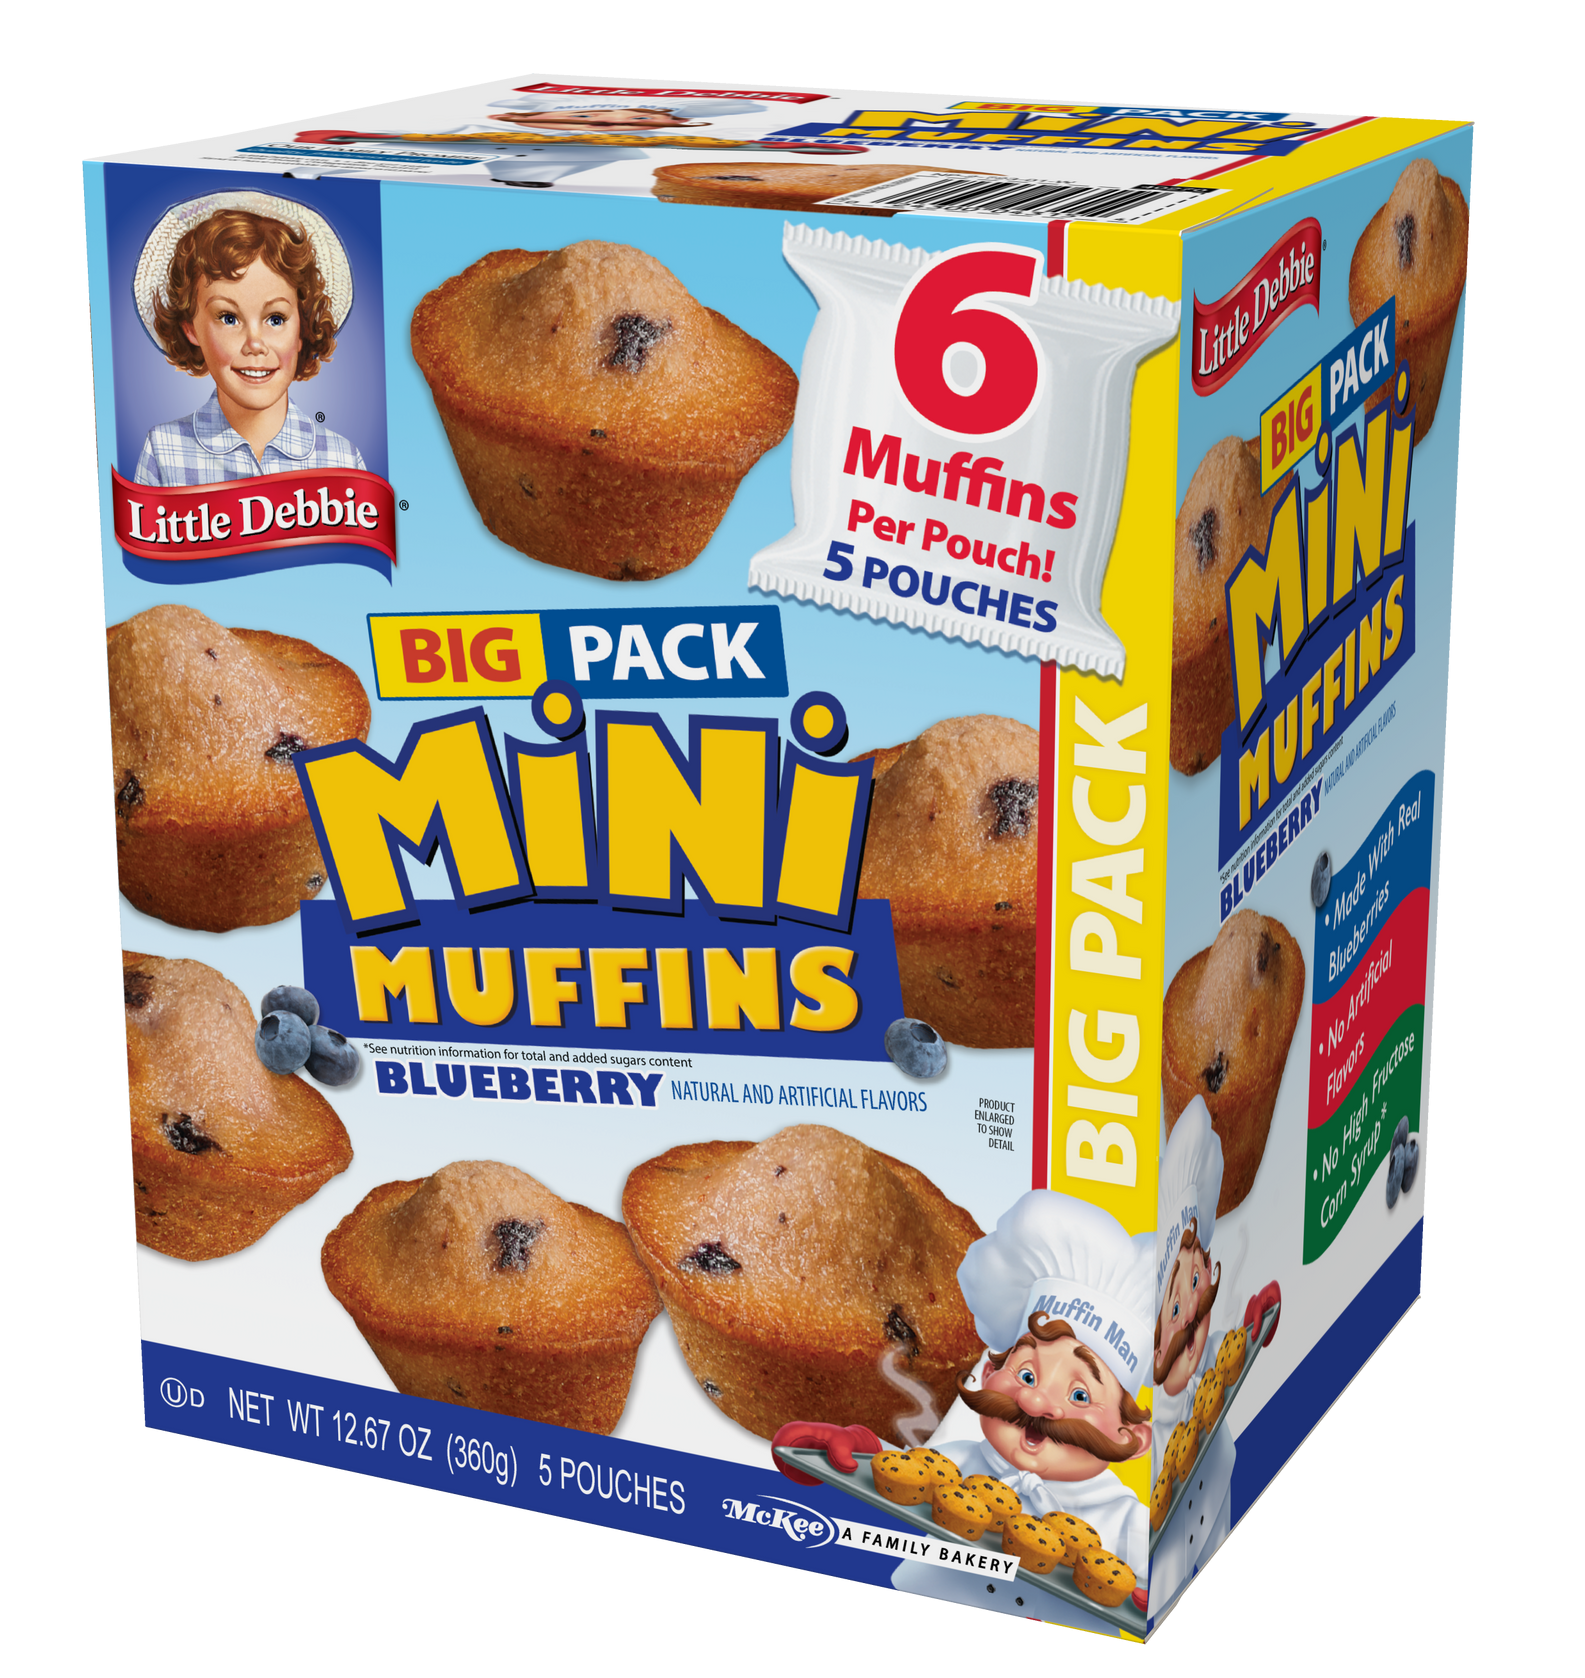 A box of little debbie blueberry mini muffins